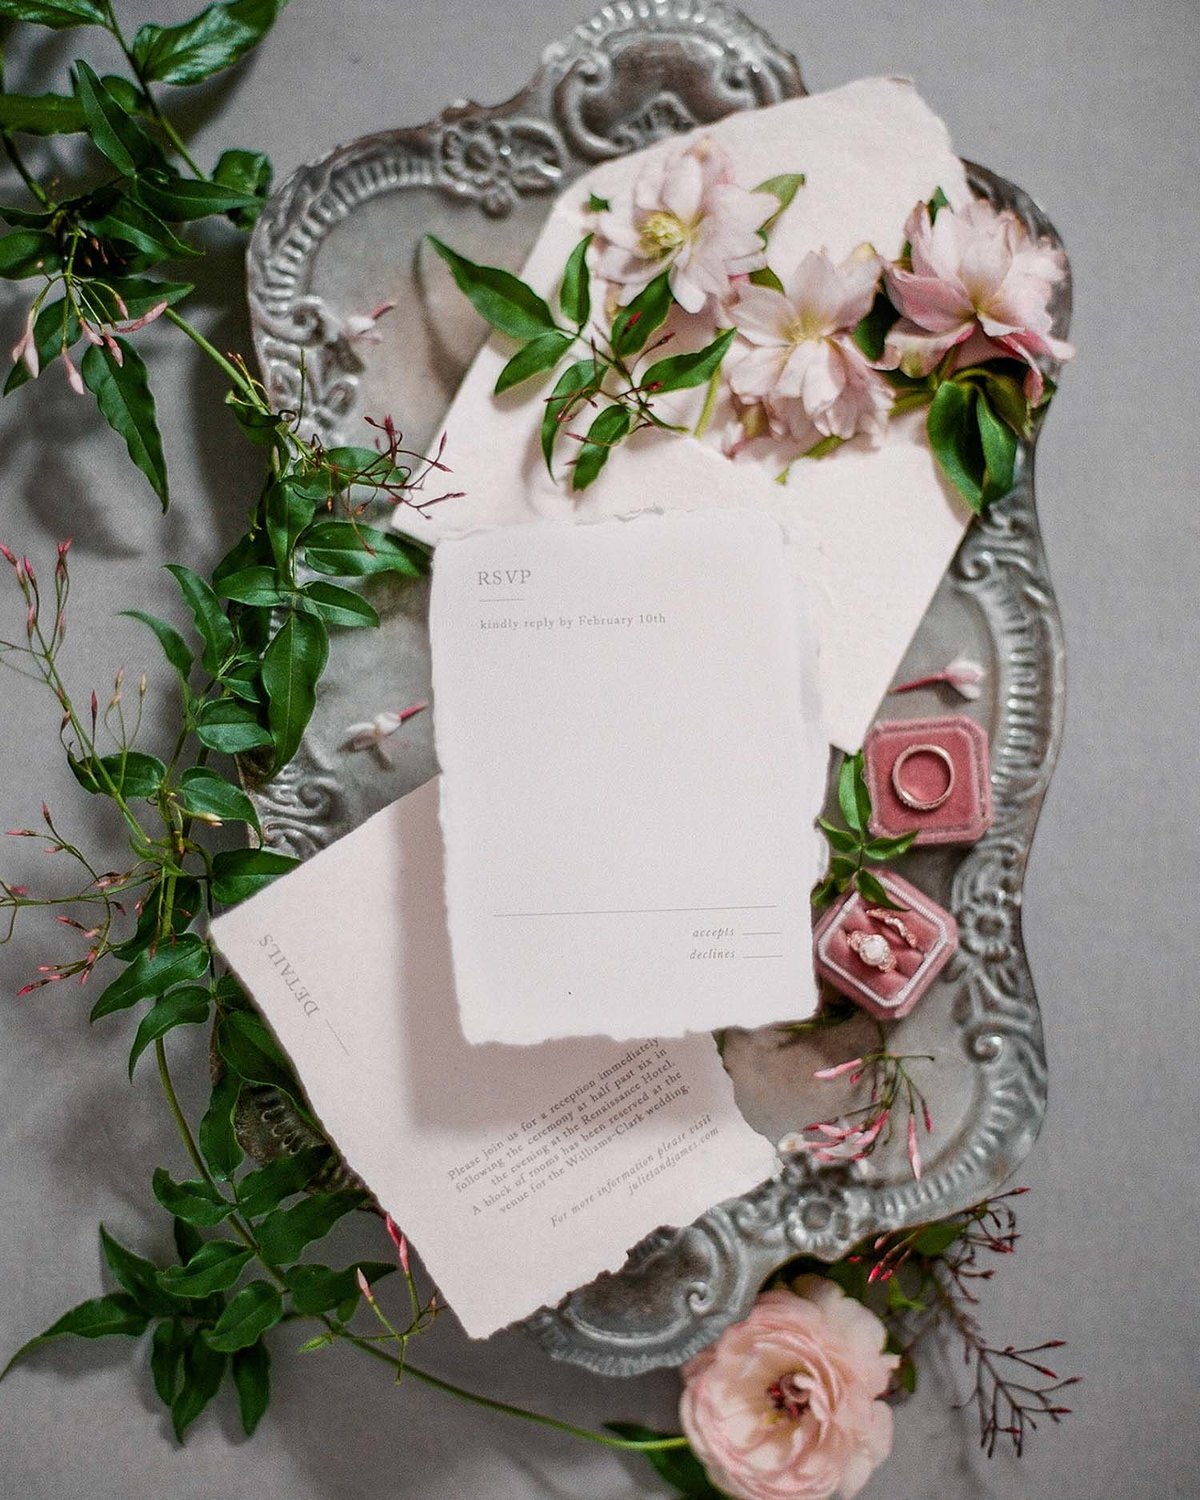 Dominique Alba wedding invitations minimalist collection poente suite rsvp and details card